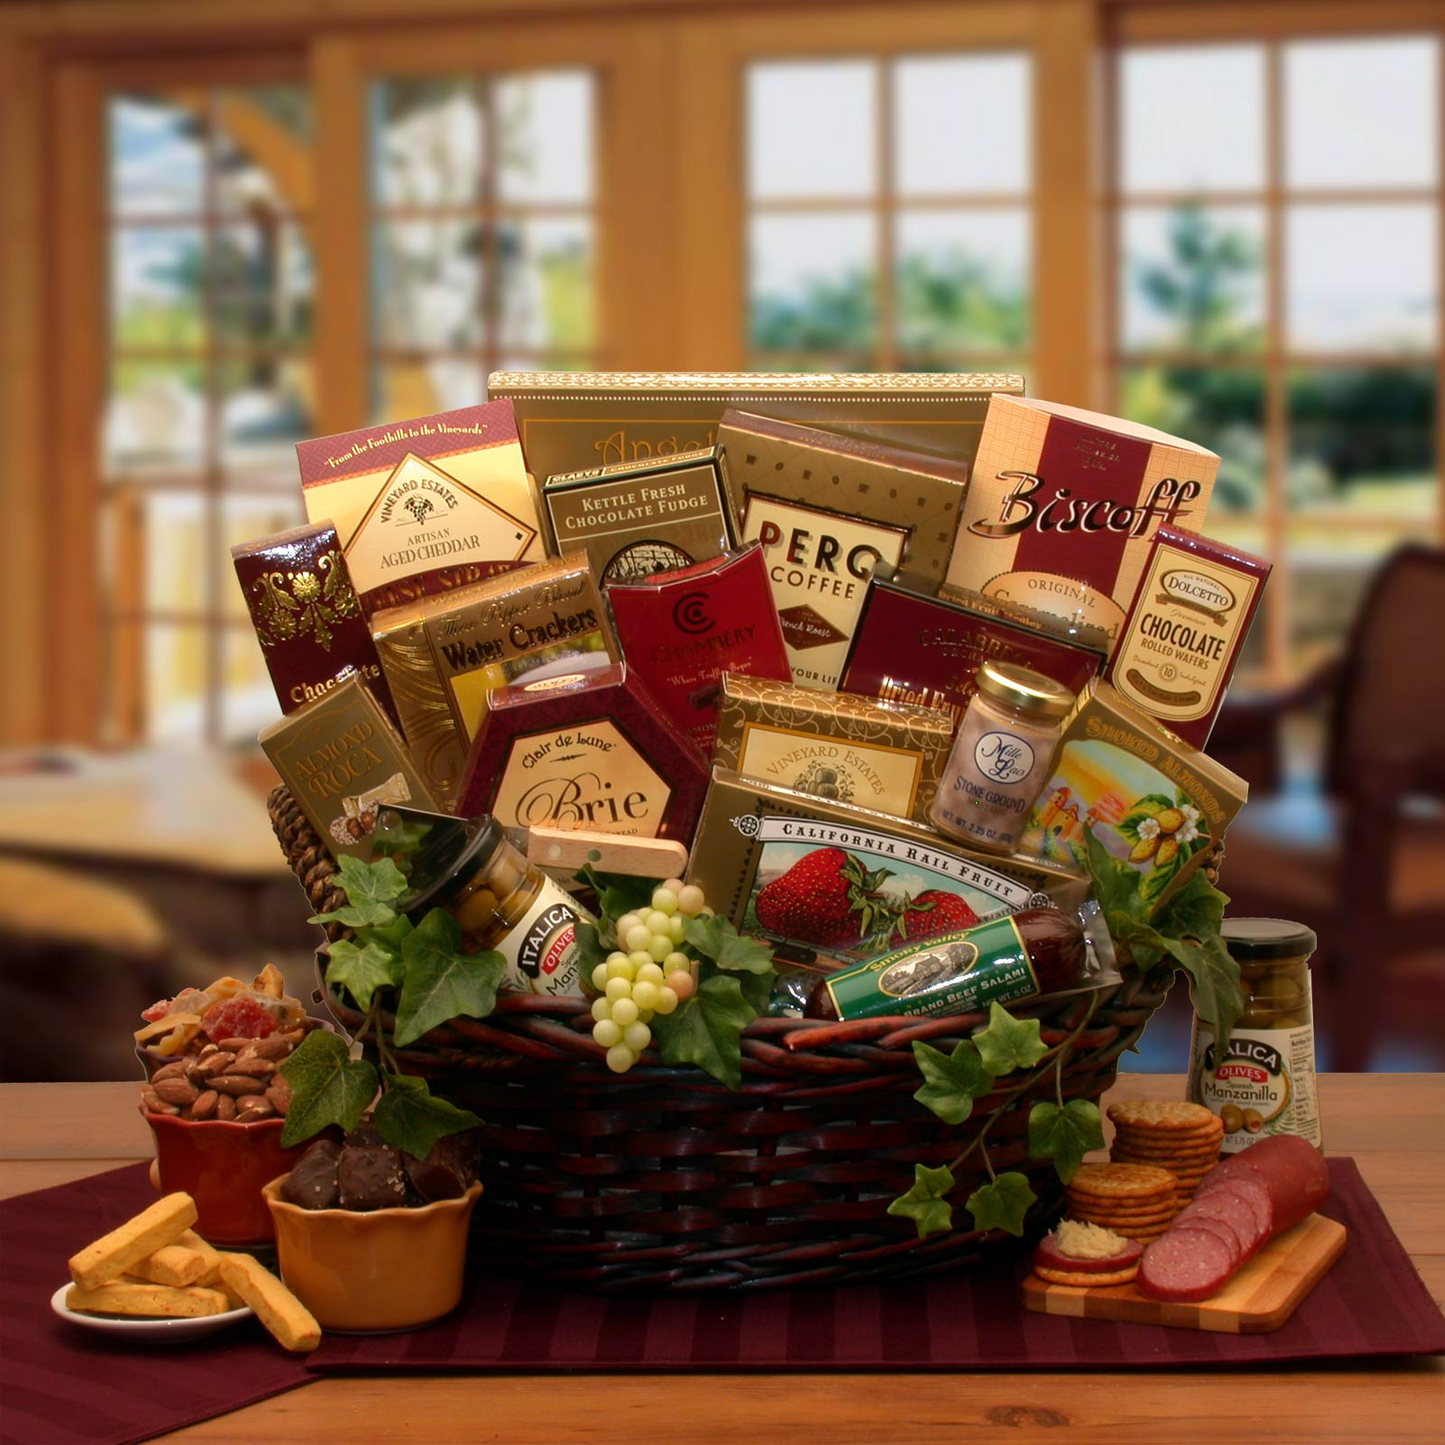 The Ultimate Gourmet Gift Basket - Decadent Assortment of Gourmet Treats